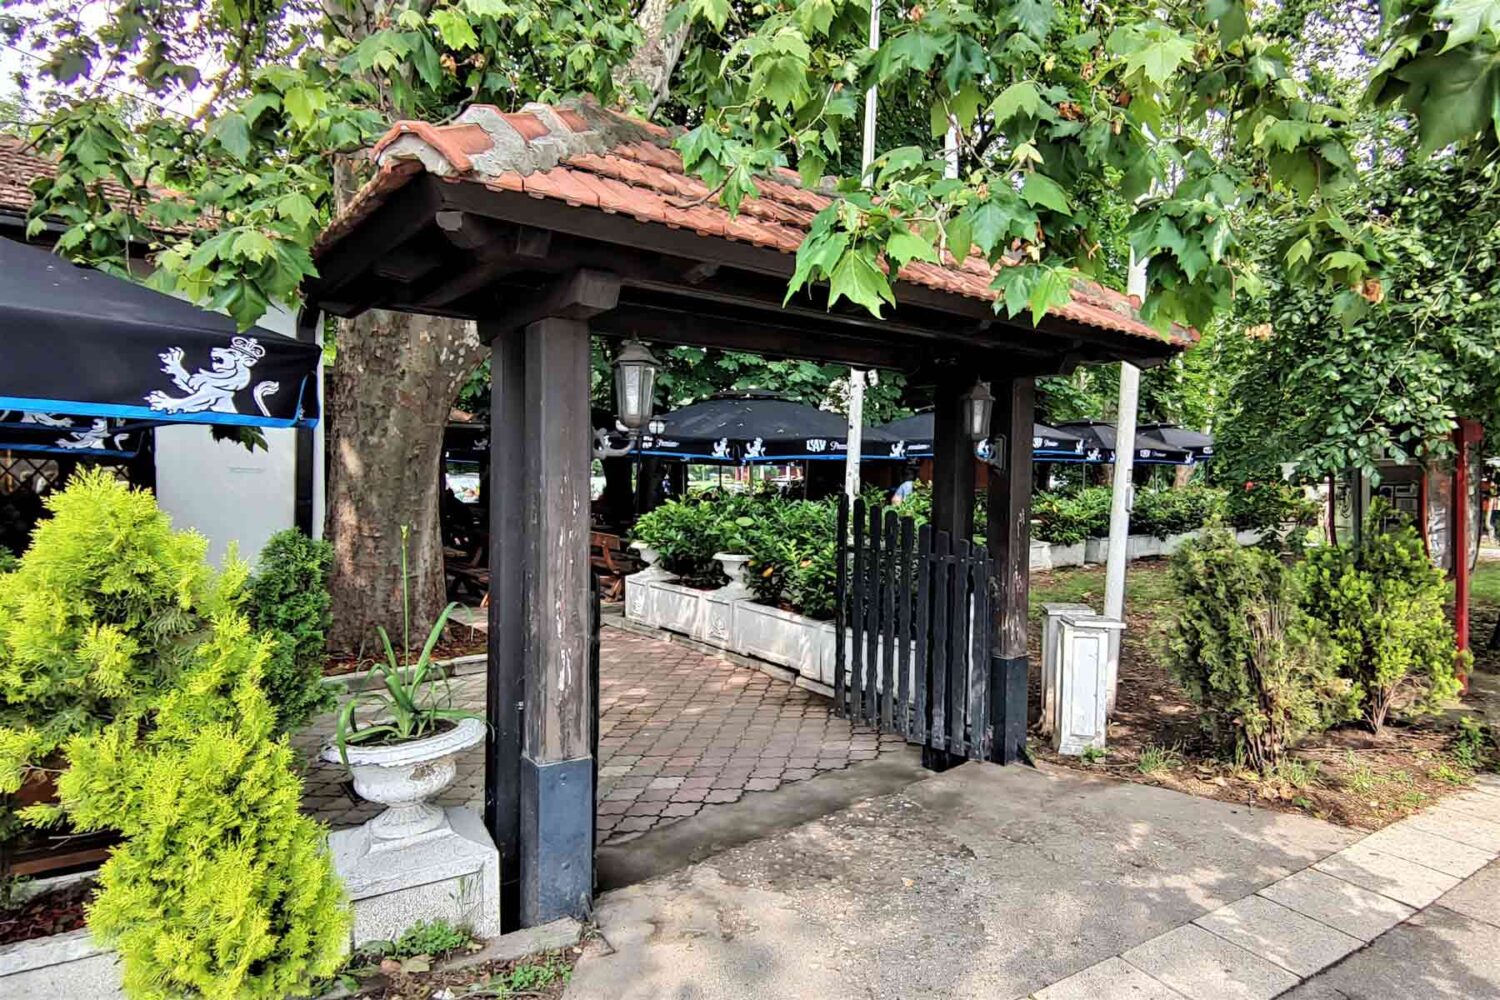 Džakarta restoran ime bogatu ponudu hrane i pića